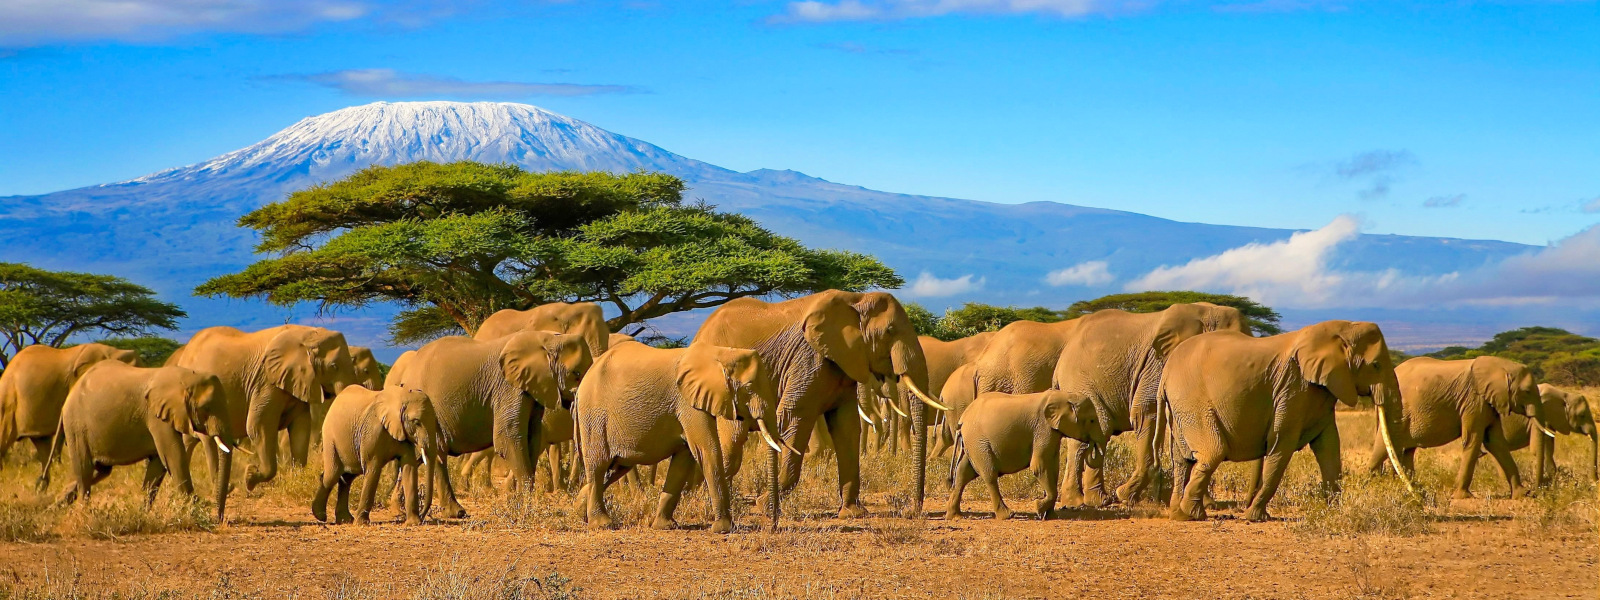 Mount Kilimajaro National Park